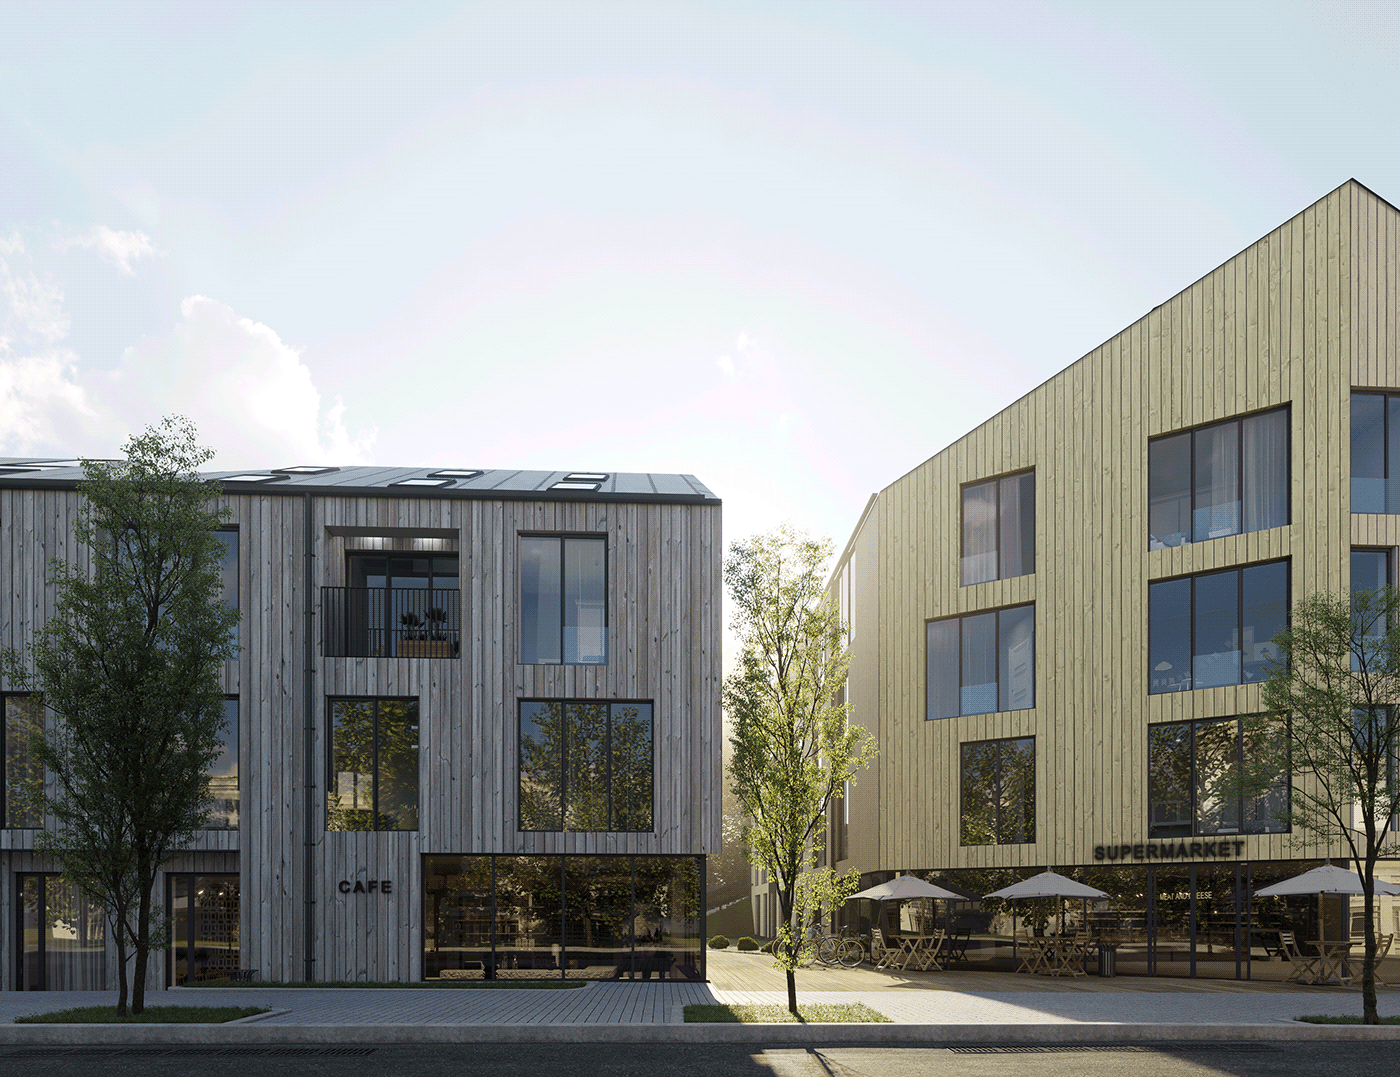 3ds max architecture corona renderer Estonia exterior rendering residential visualization